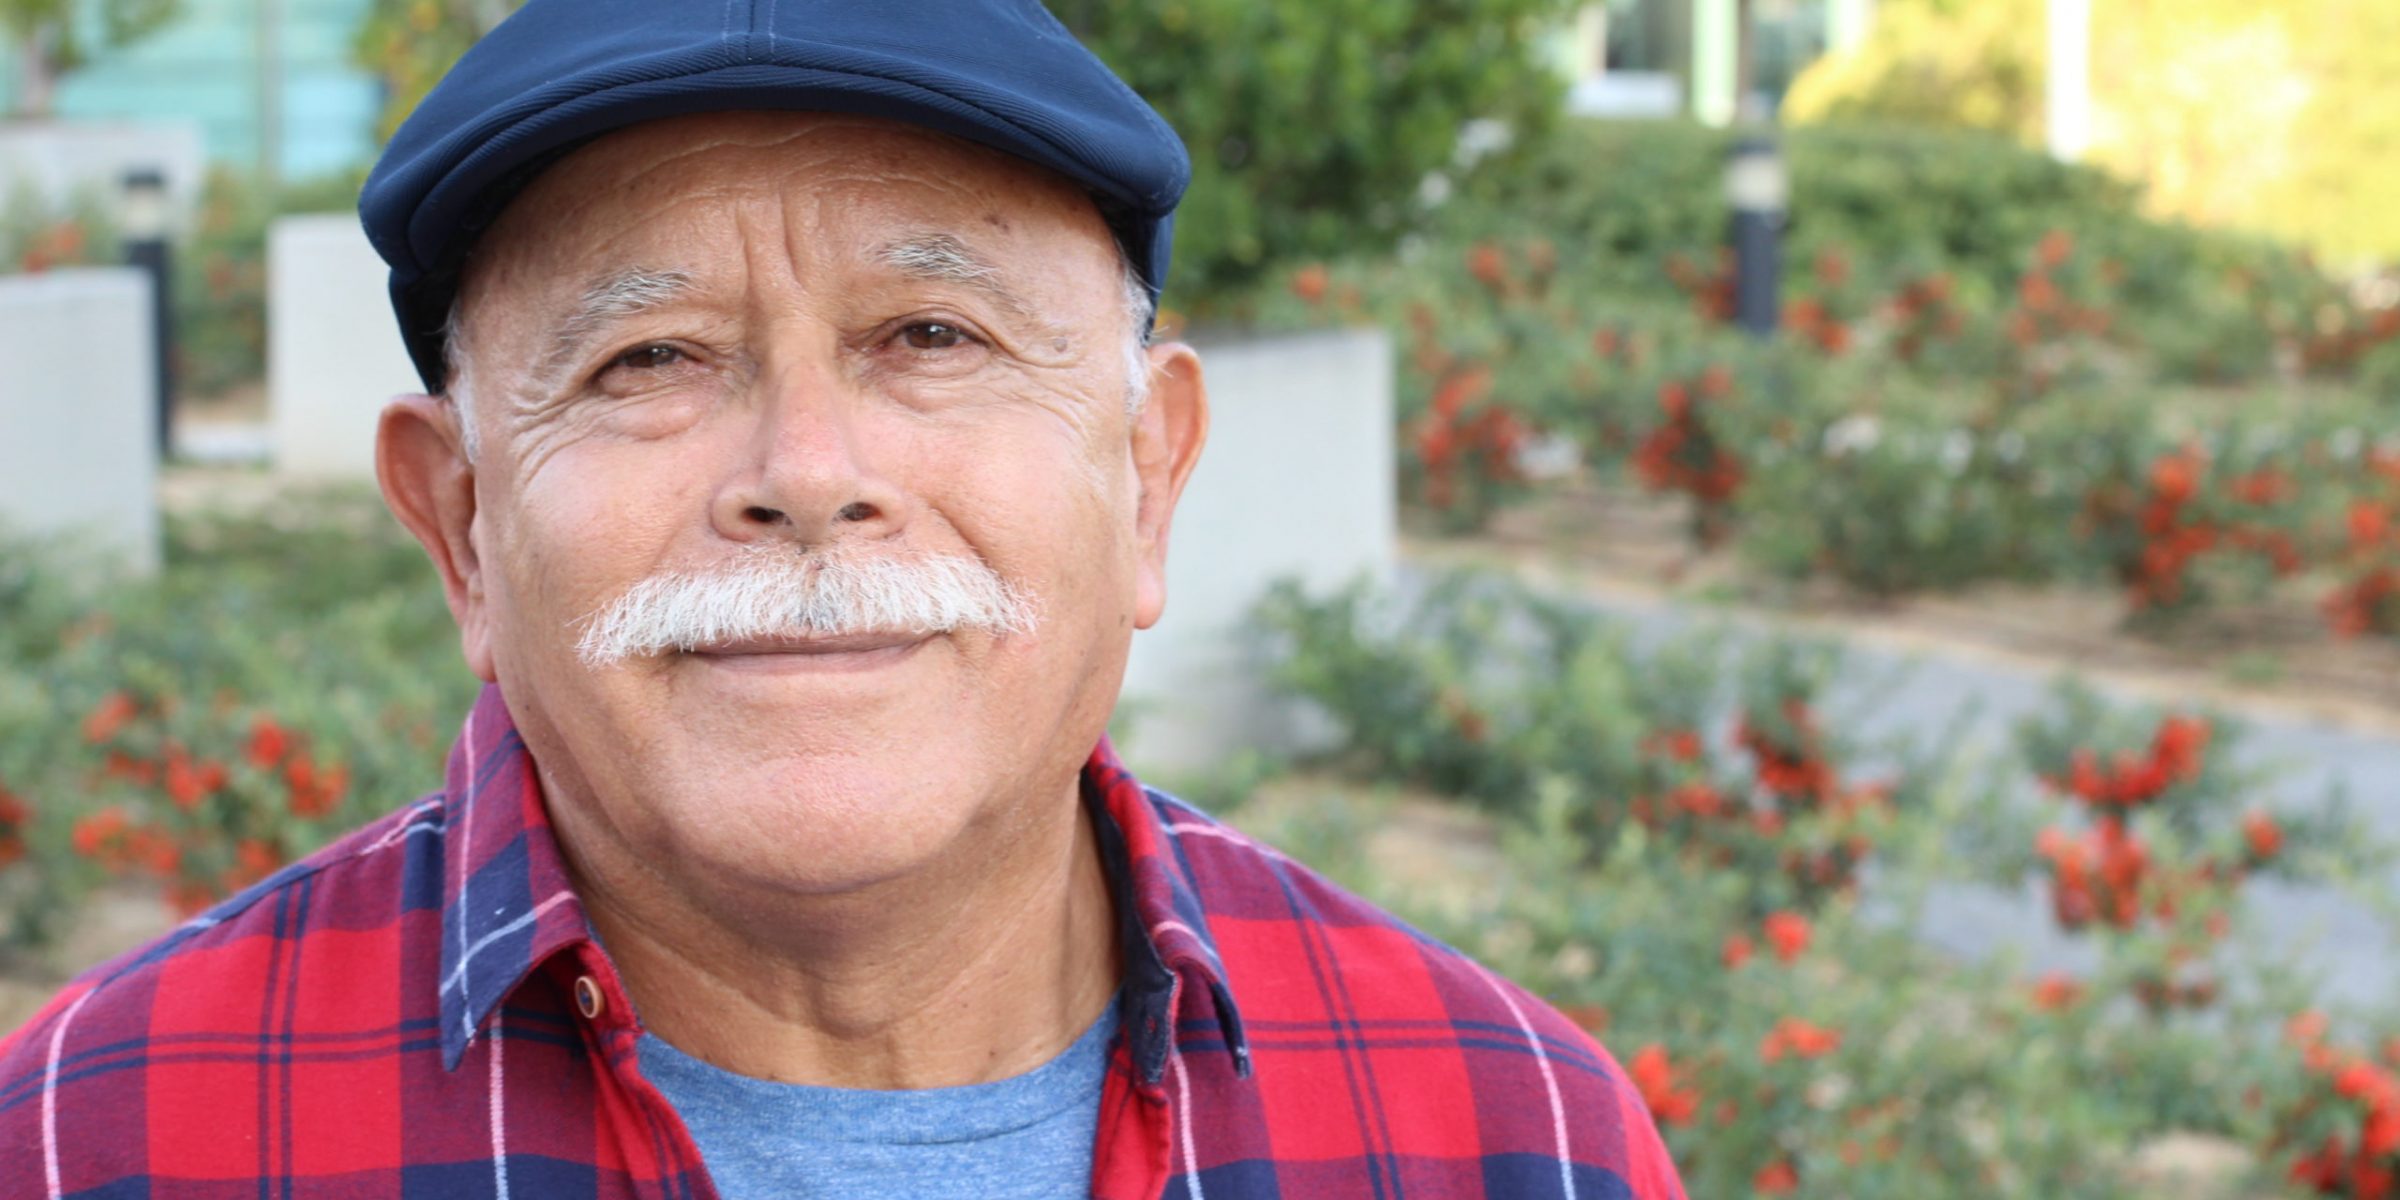 Senior Hispanic man outdoor headshot